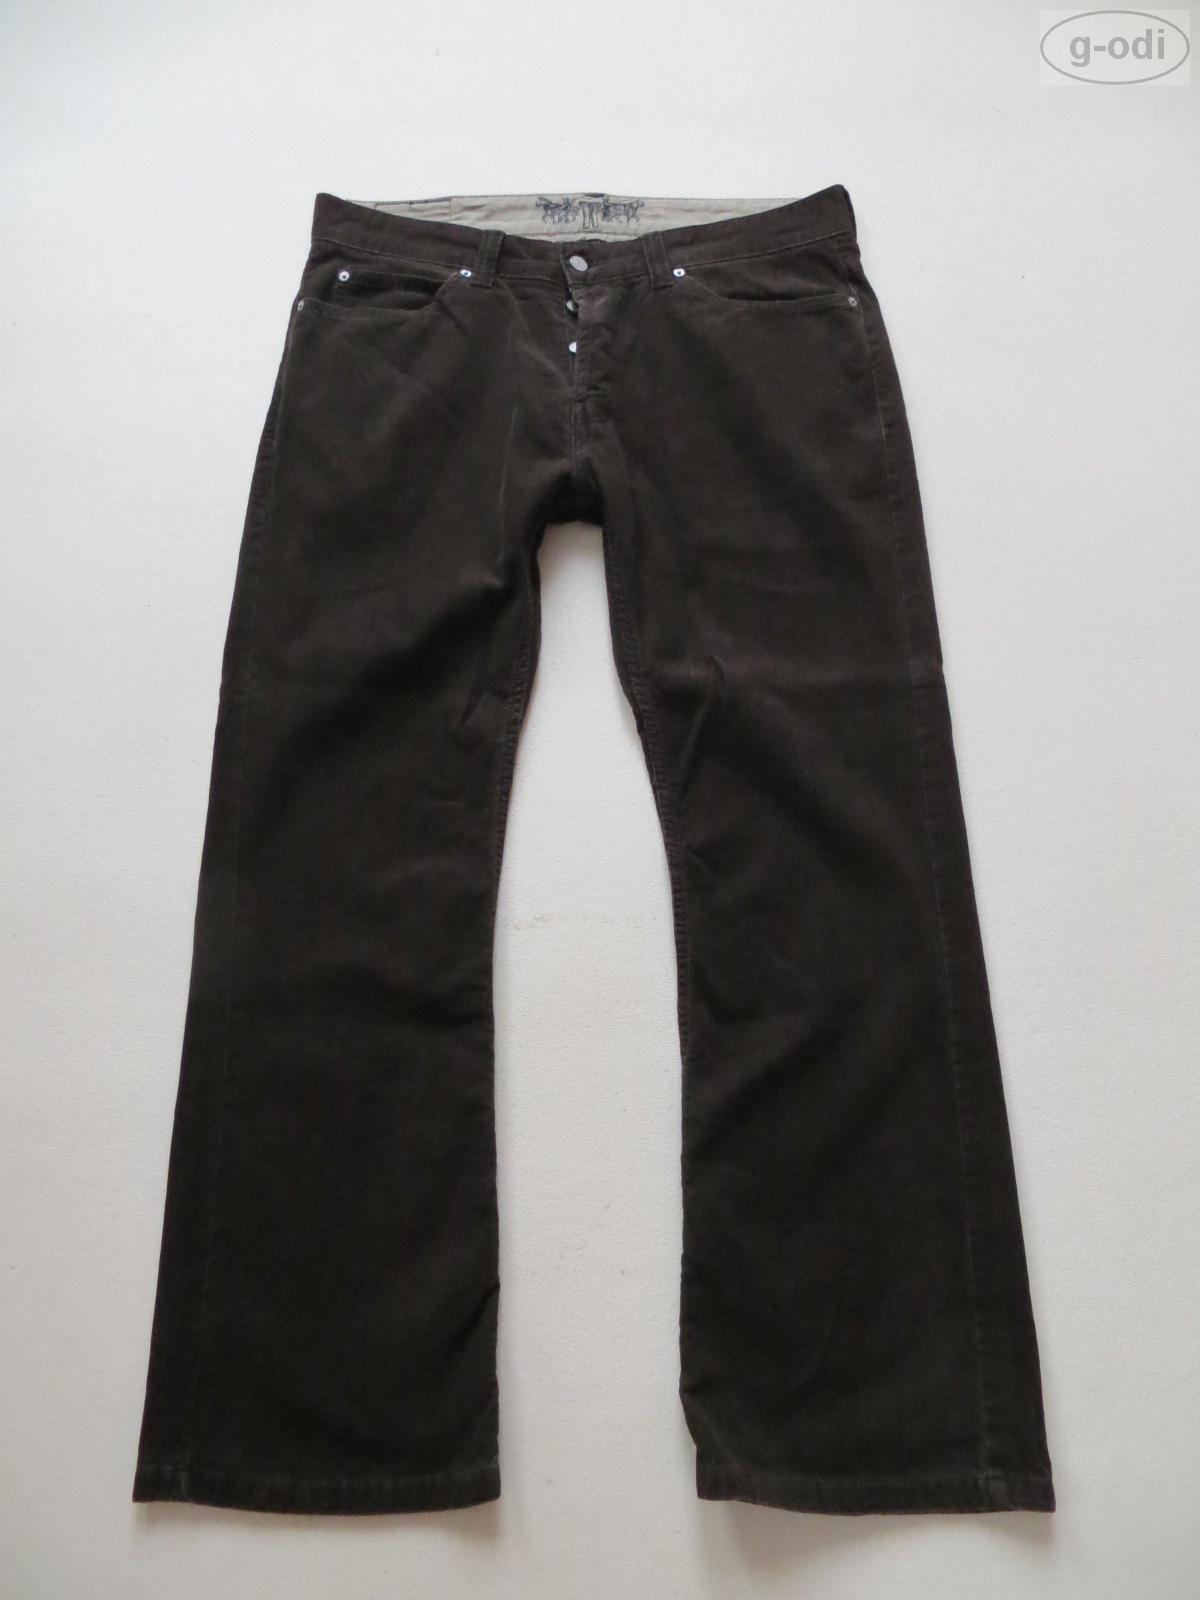 Levi's 512 Corduroy Bootcut Jeans Trousers,W 38 /L 32,Brown Cord ...